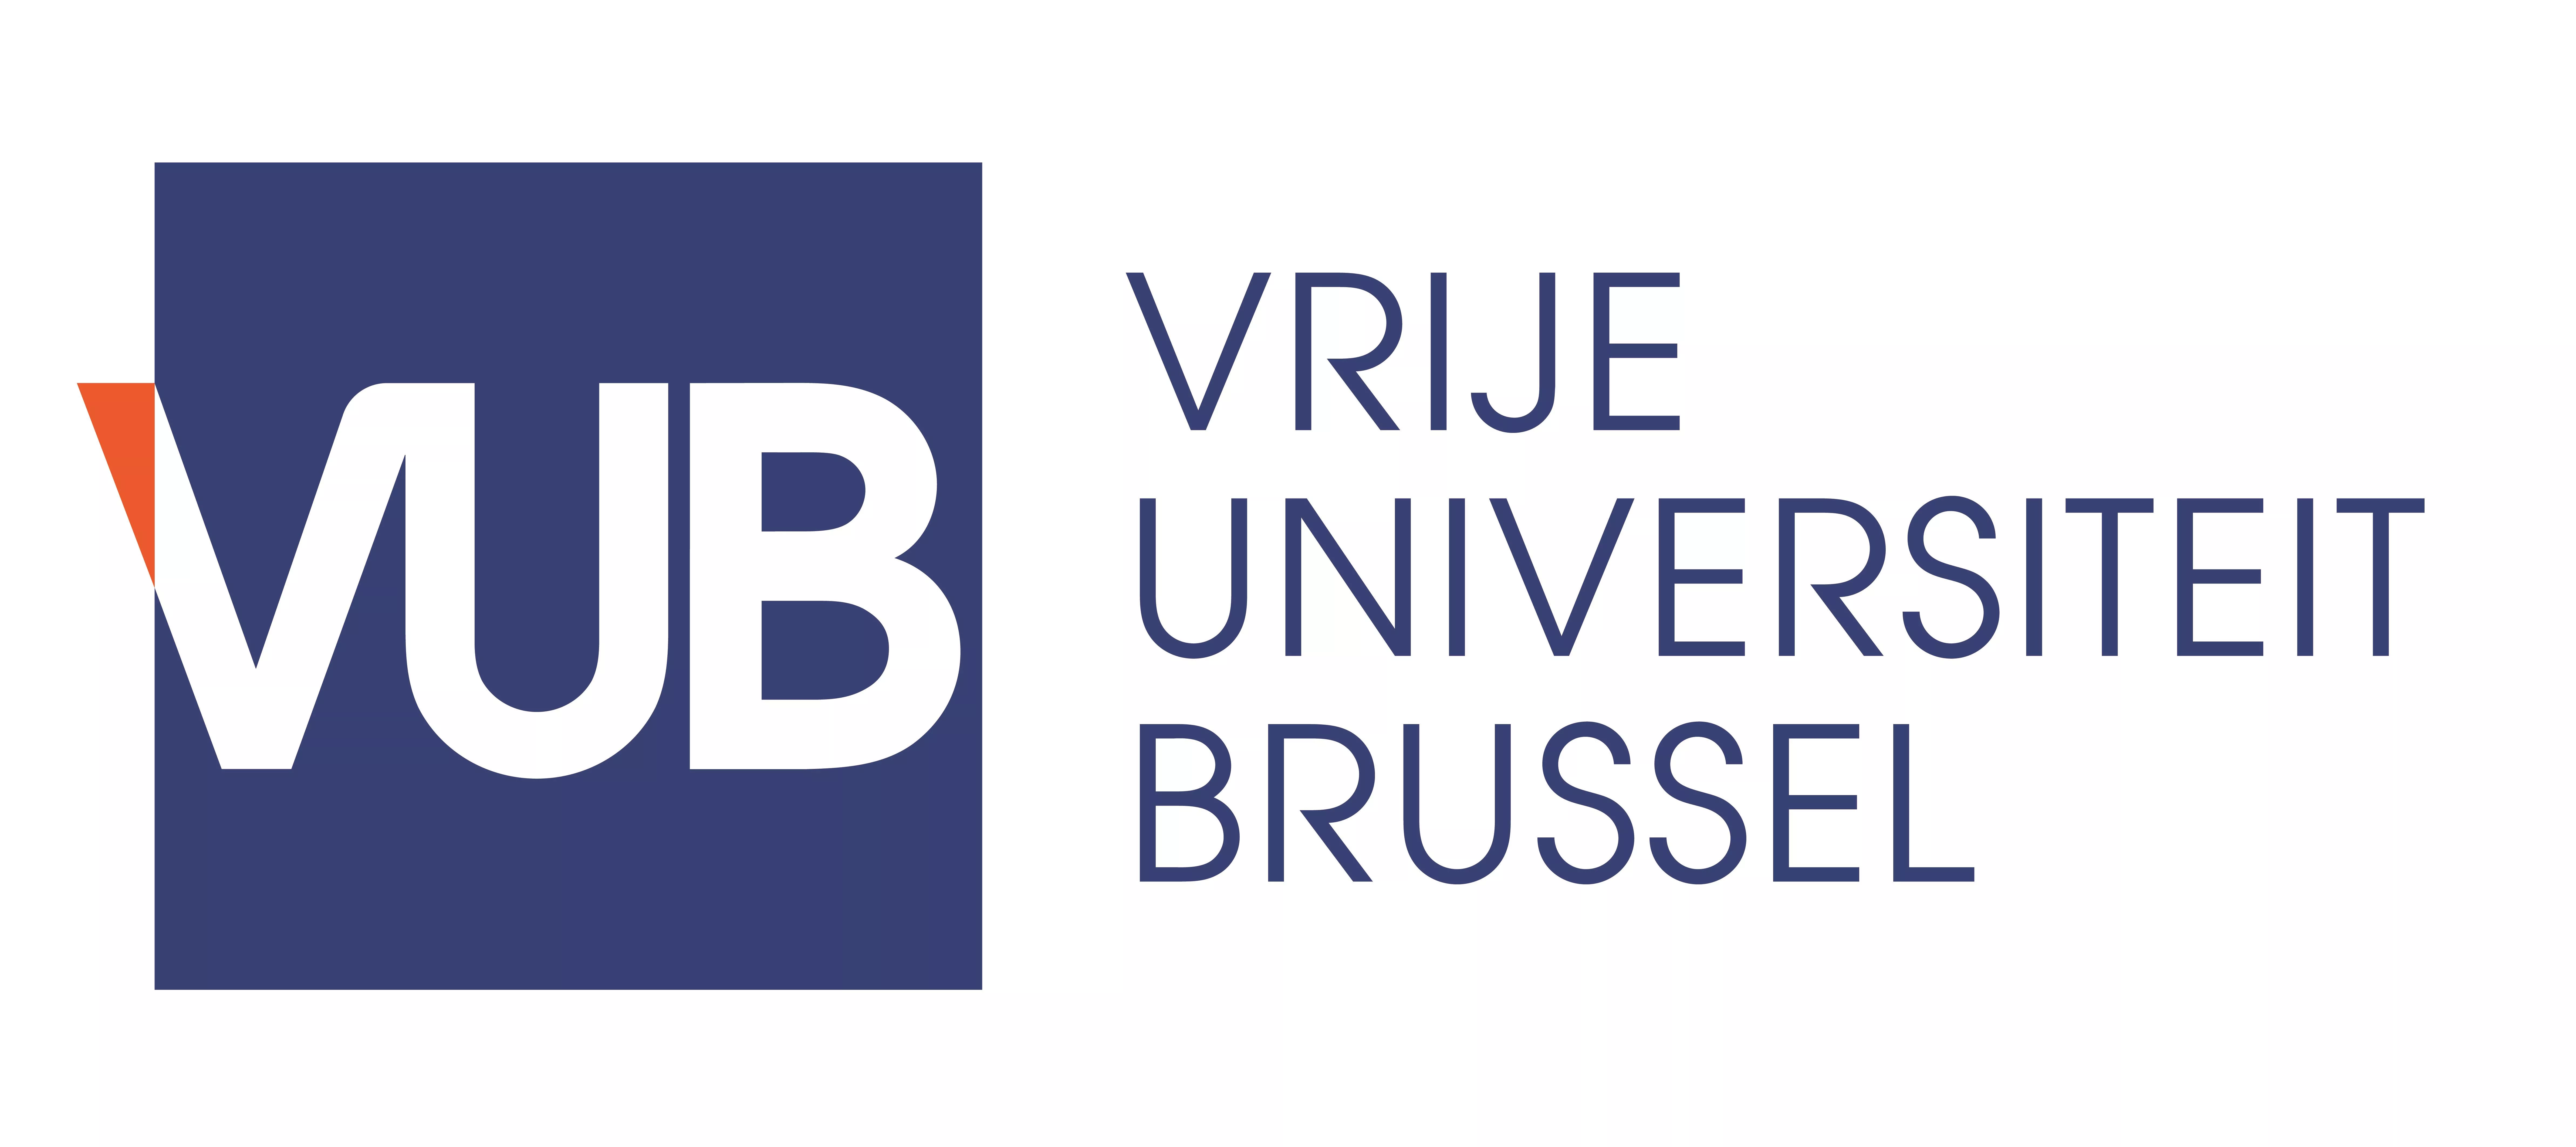 Vrije Universitat Brussel logo